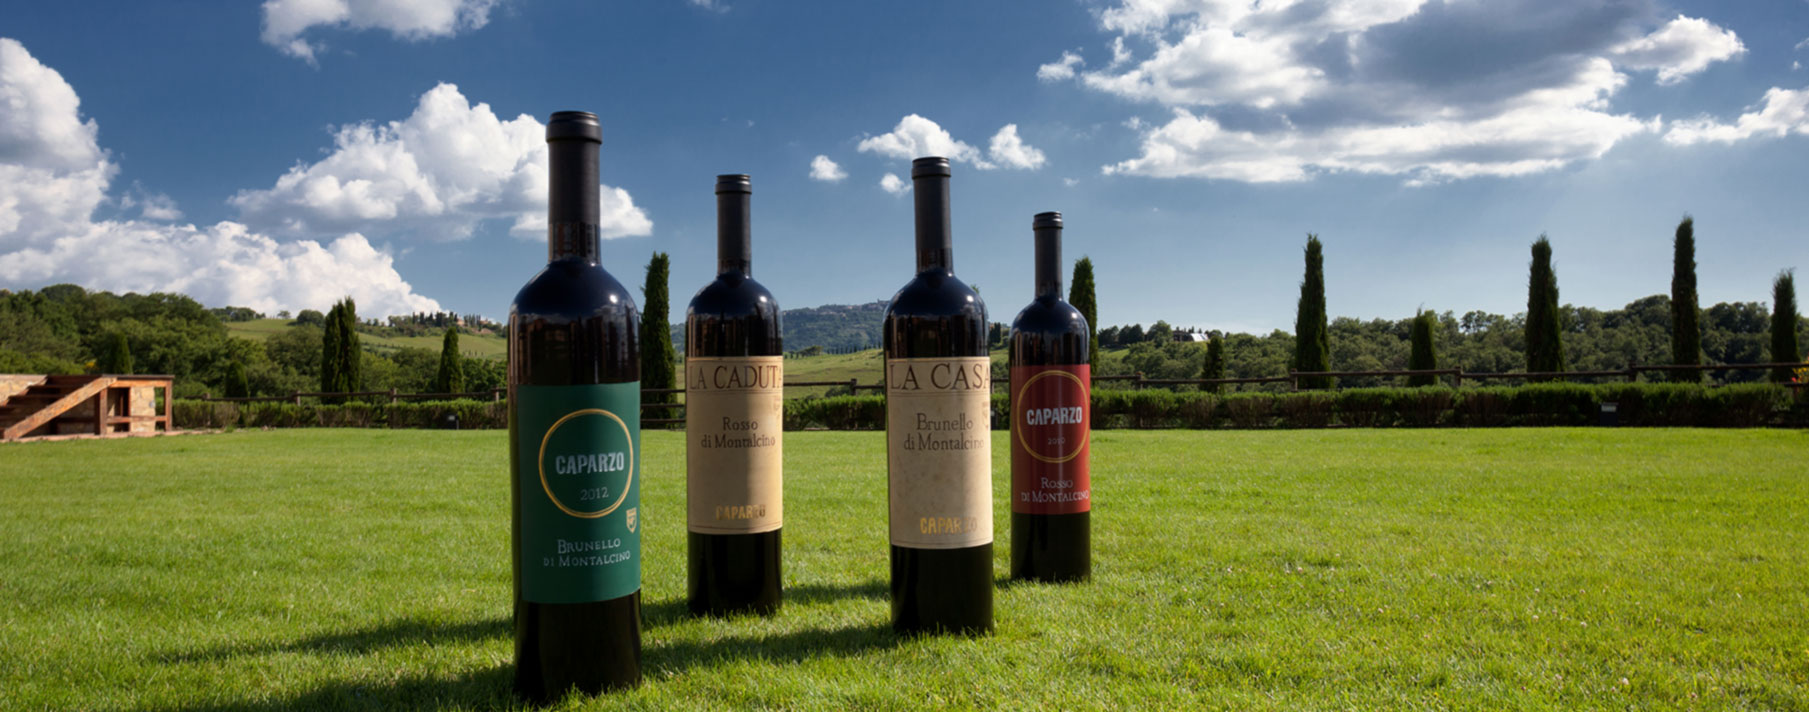 Caparzo vino Montalcino